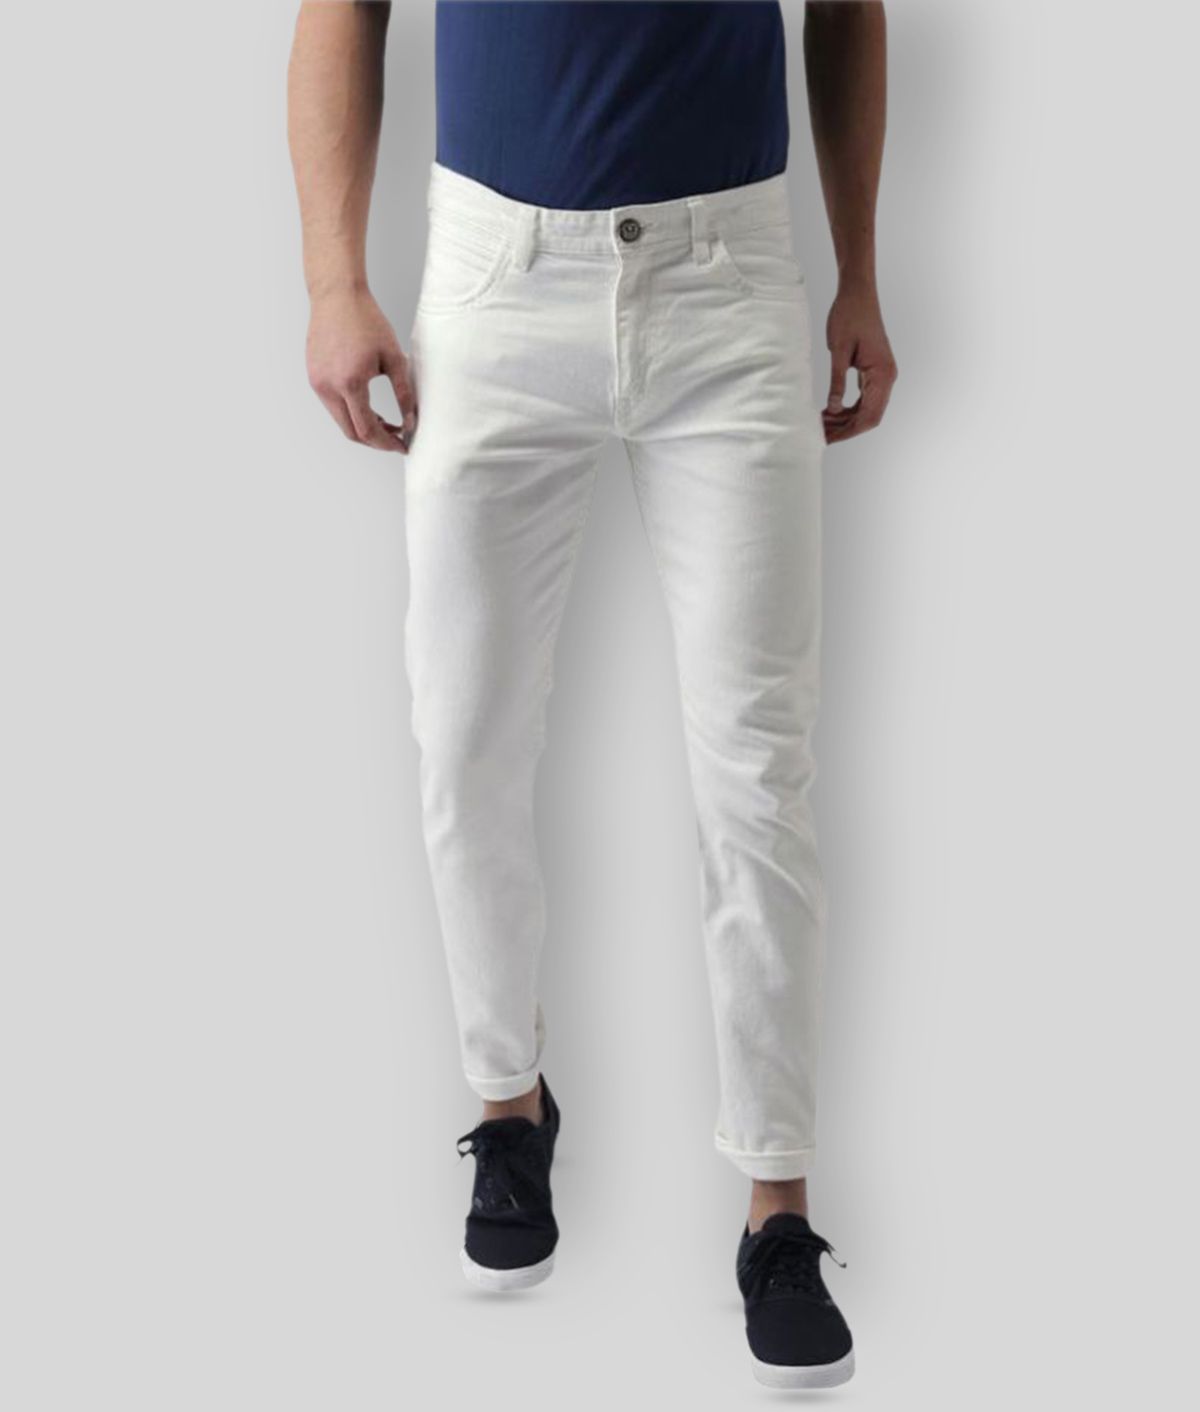     			X20 Jeans - White Denim Skinny Men's Jeans ( Pack of 1 )